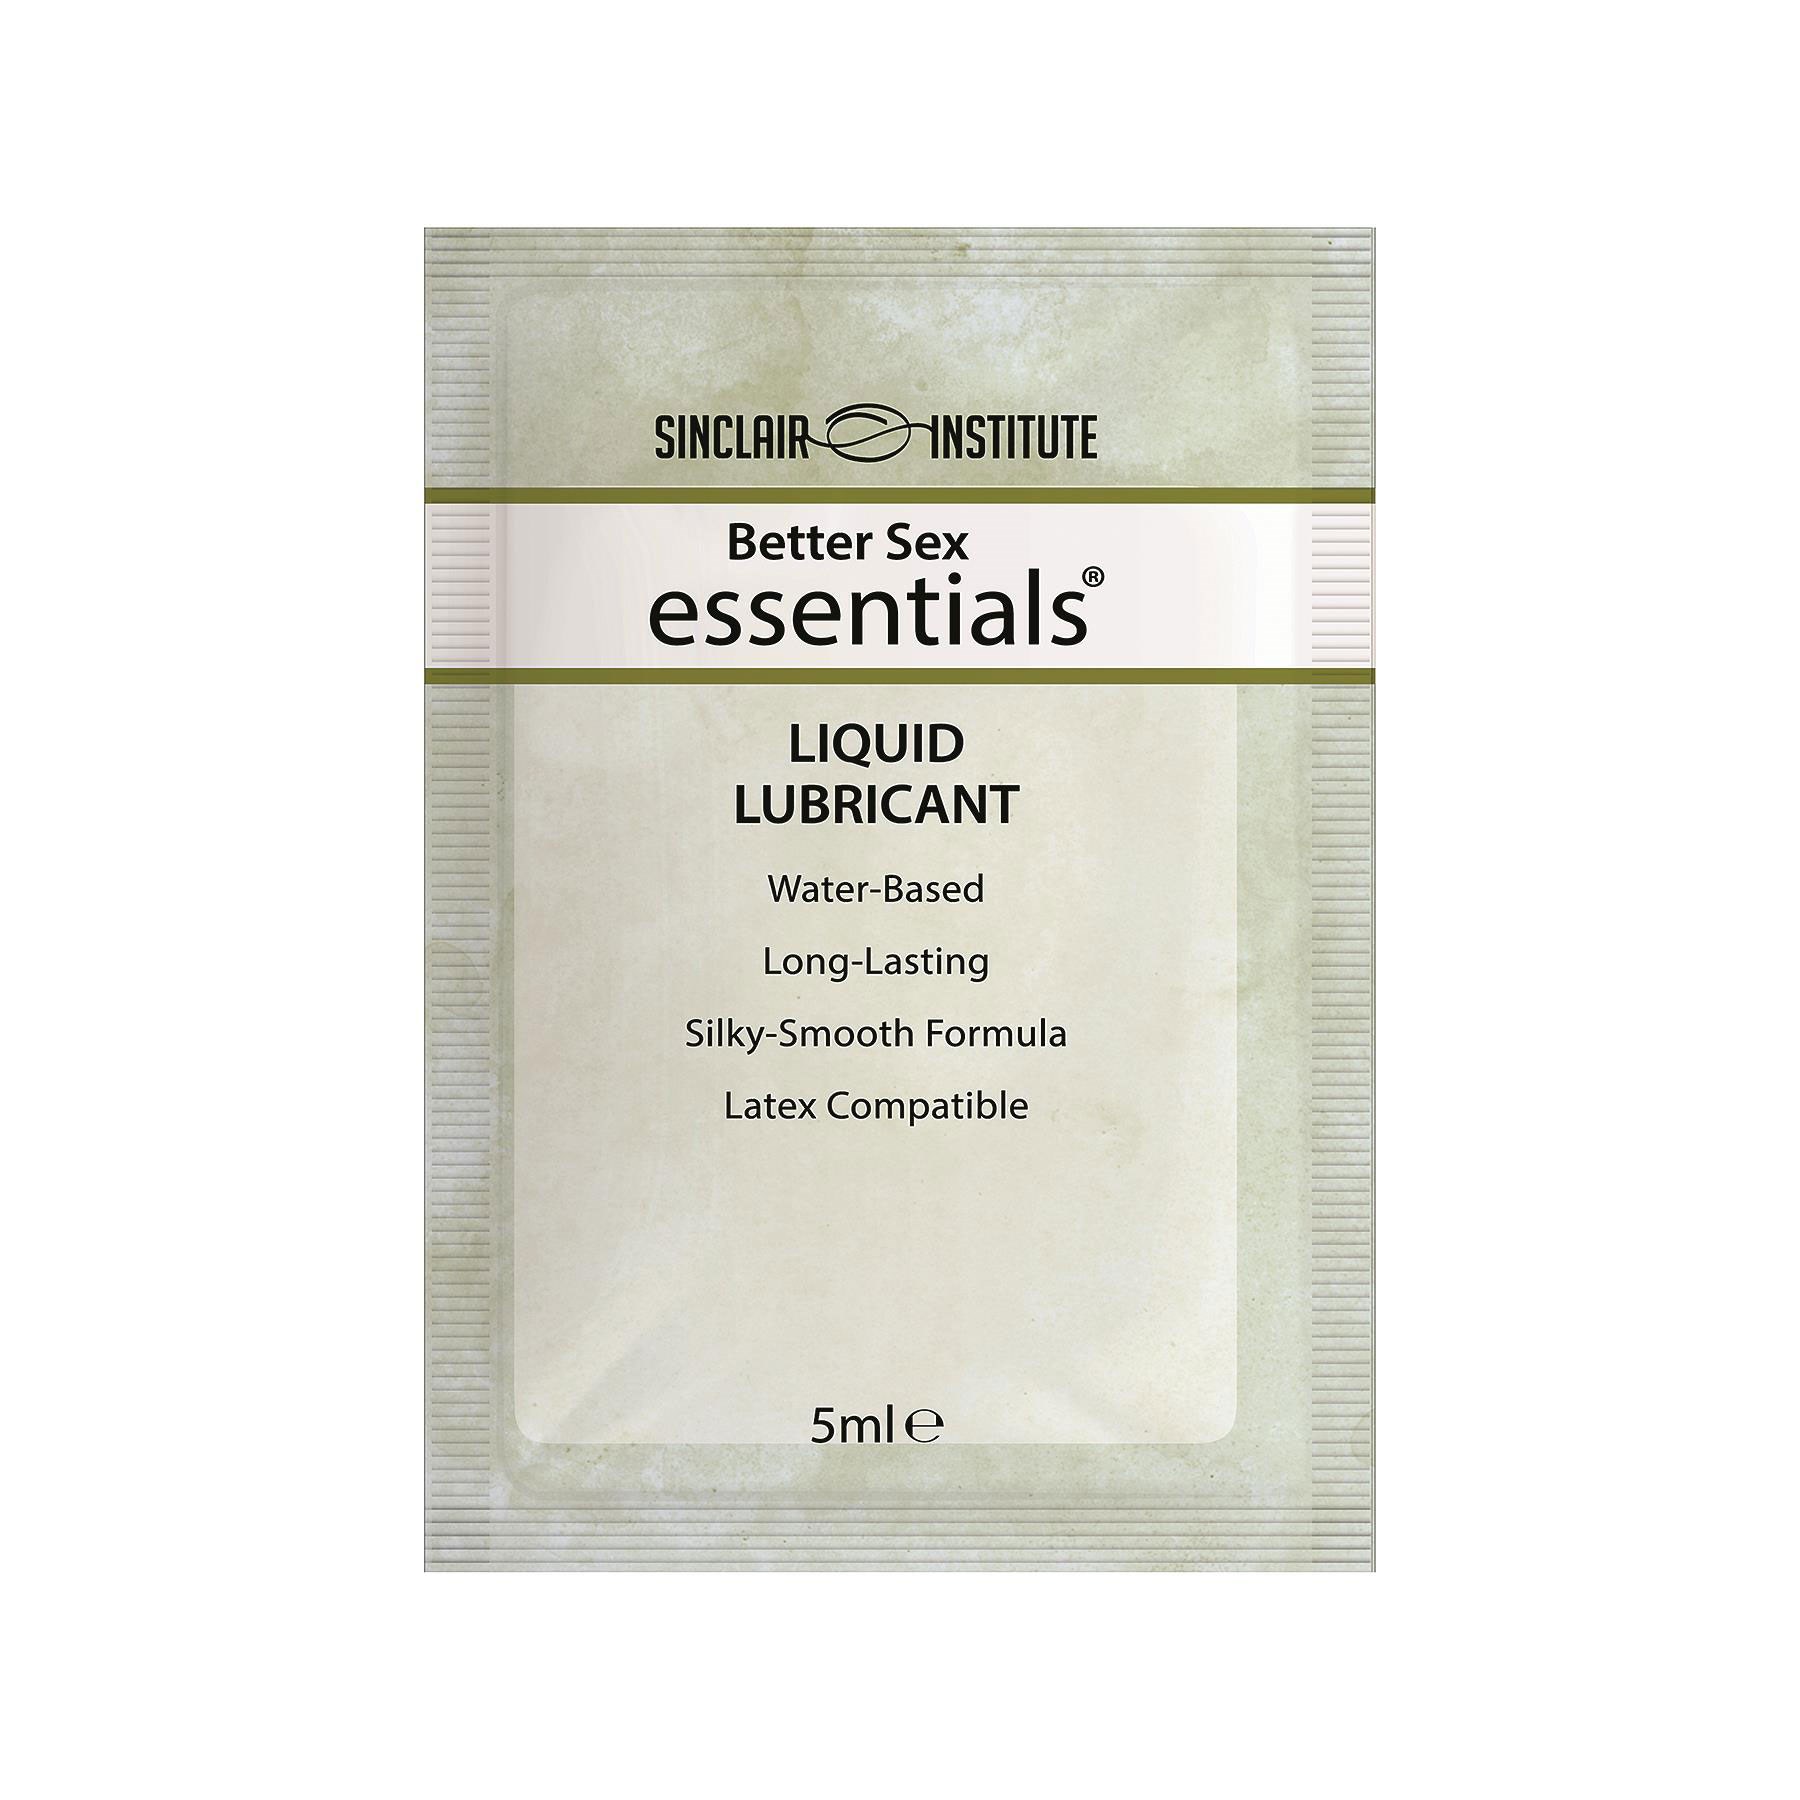 BetterSex Essentials Liquid Lubricant packet